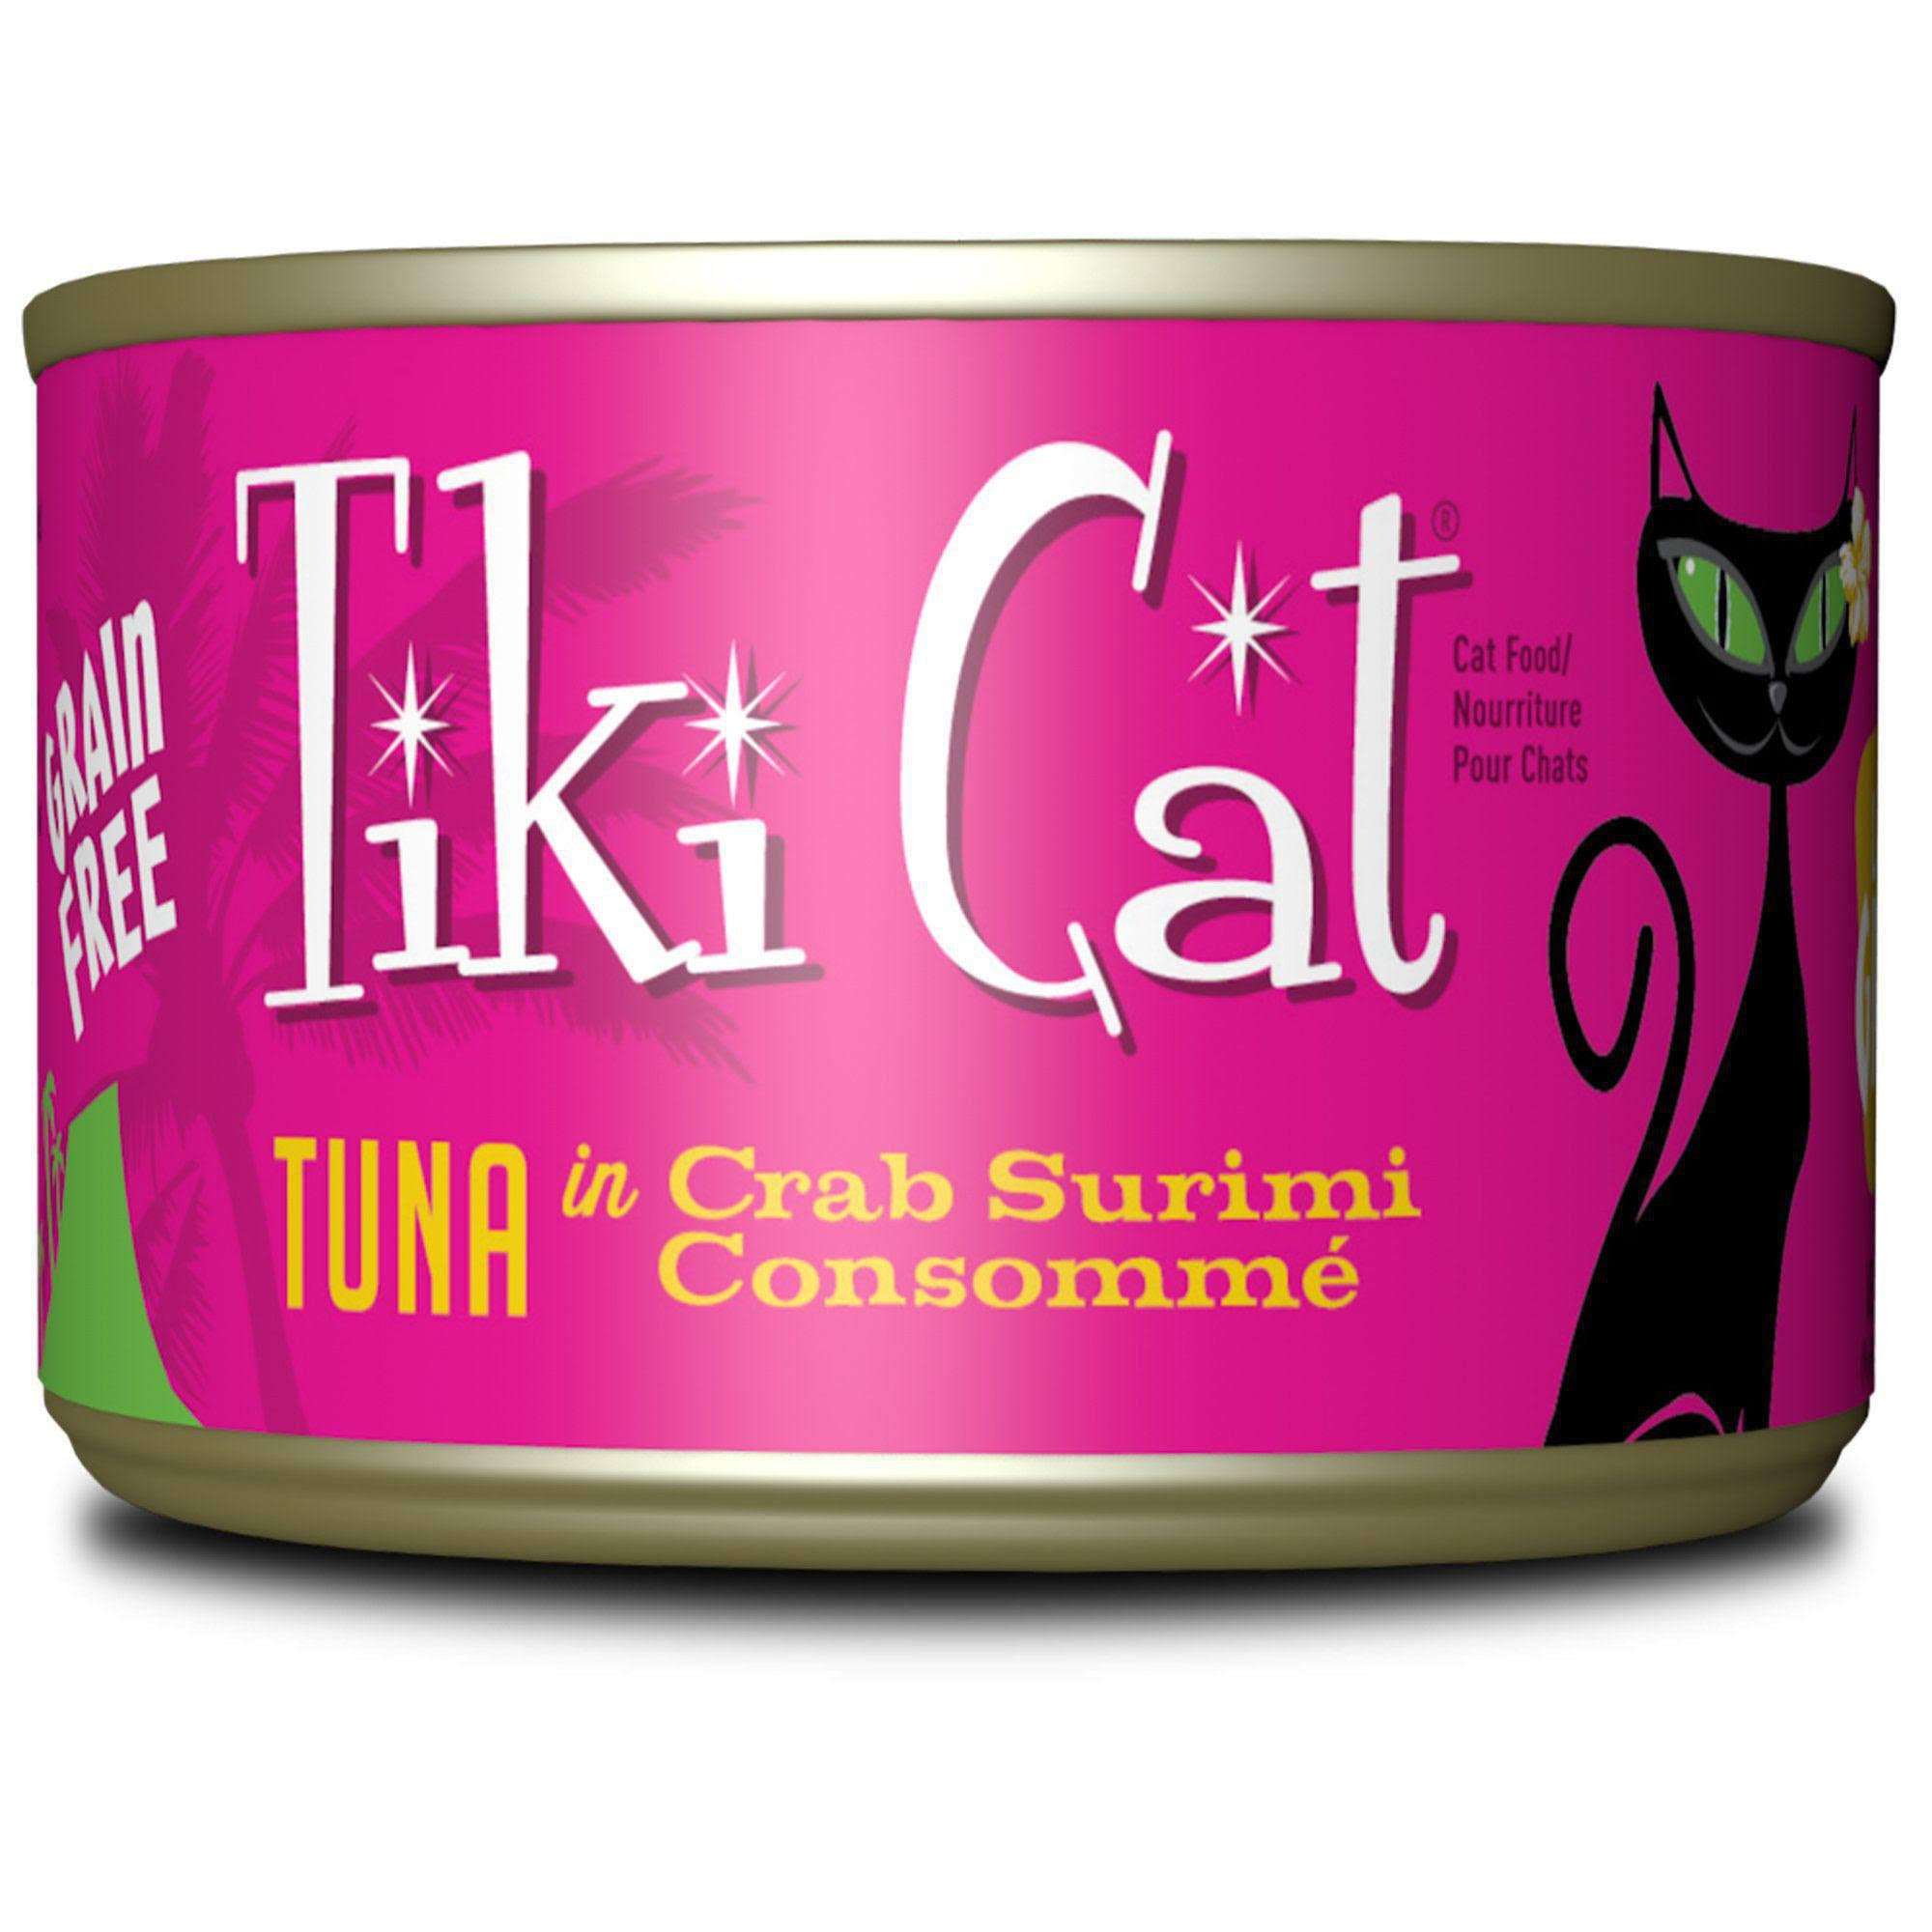 Tiki Cat Grill Tuna & Crab Surimi Recipe, 6-oz